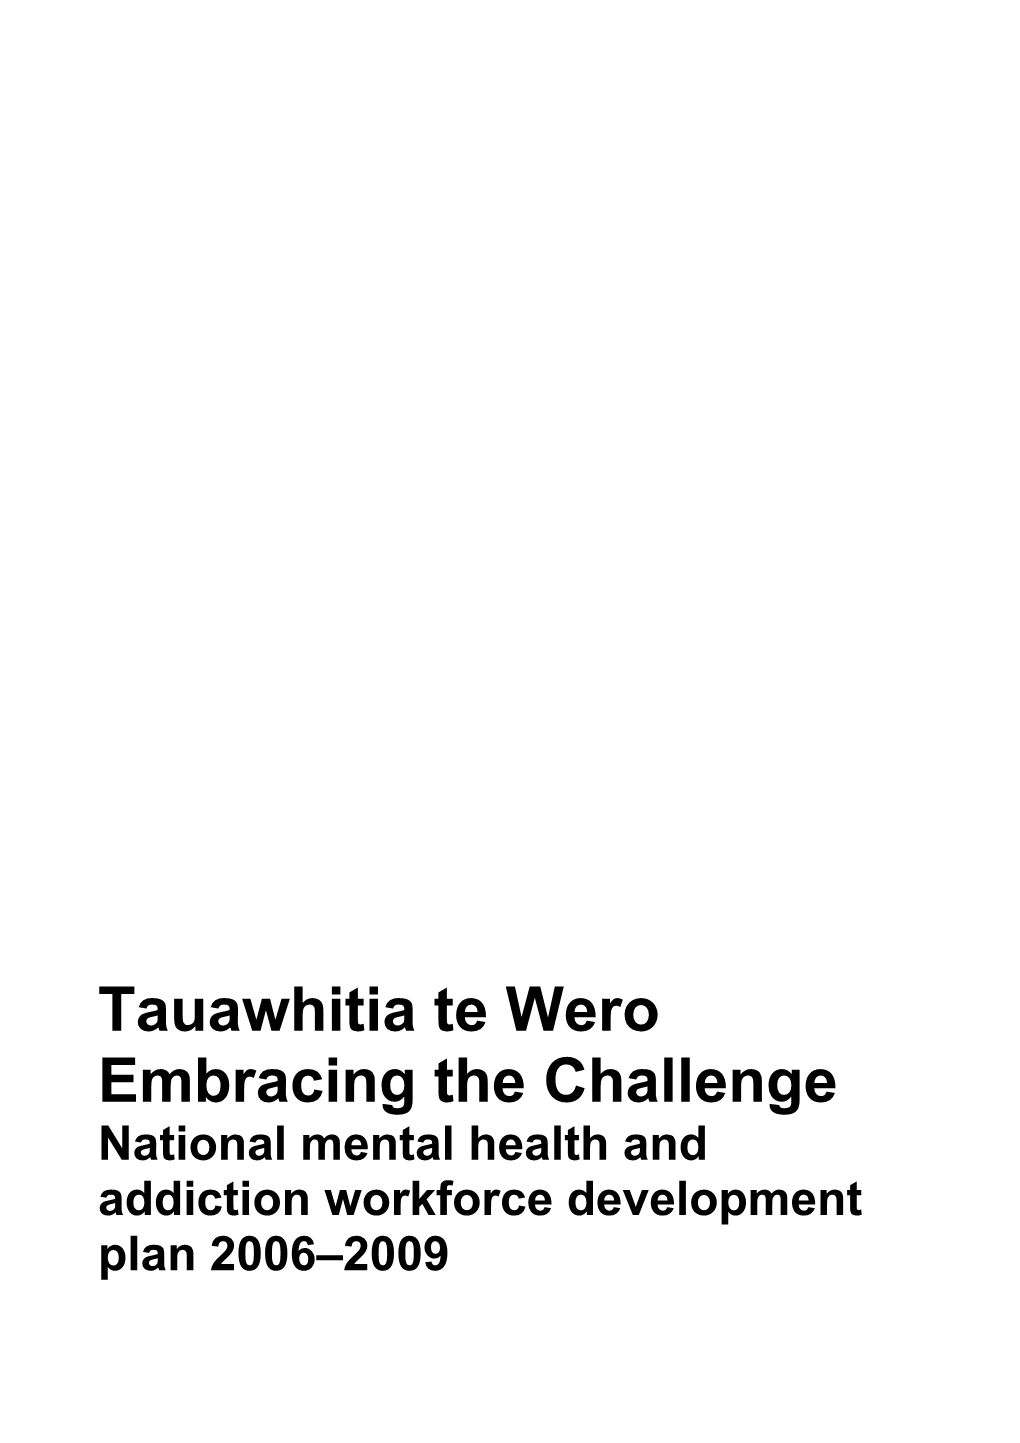 Tauawhitia Te Wero Embracing the Challenge